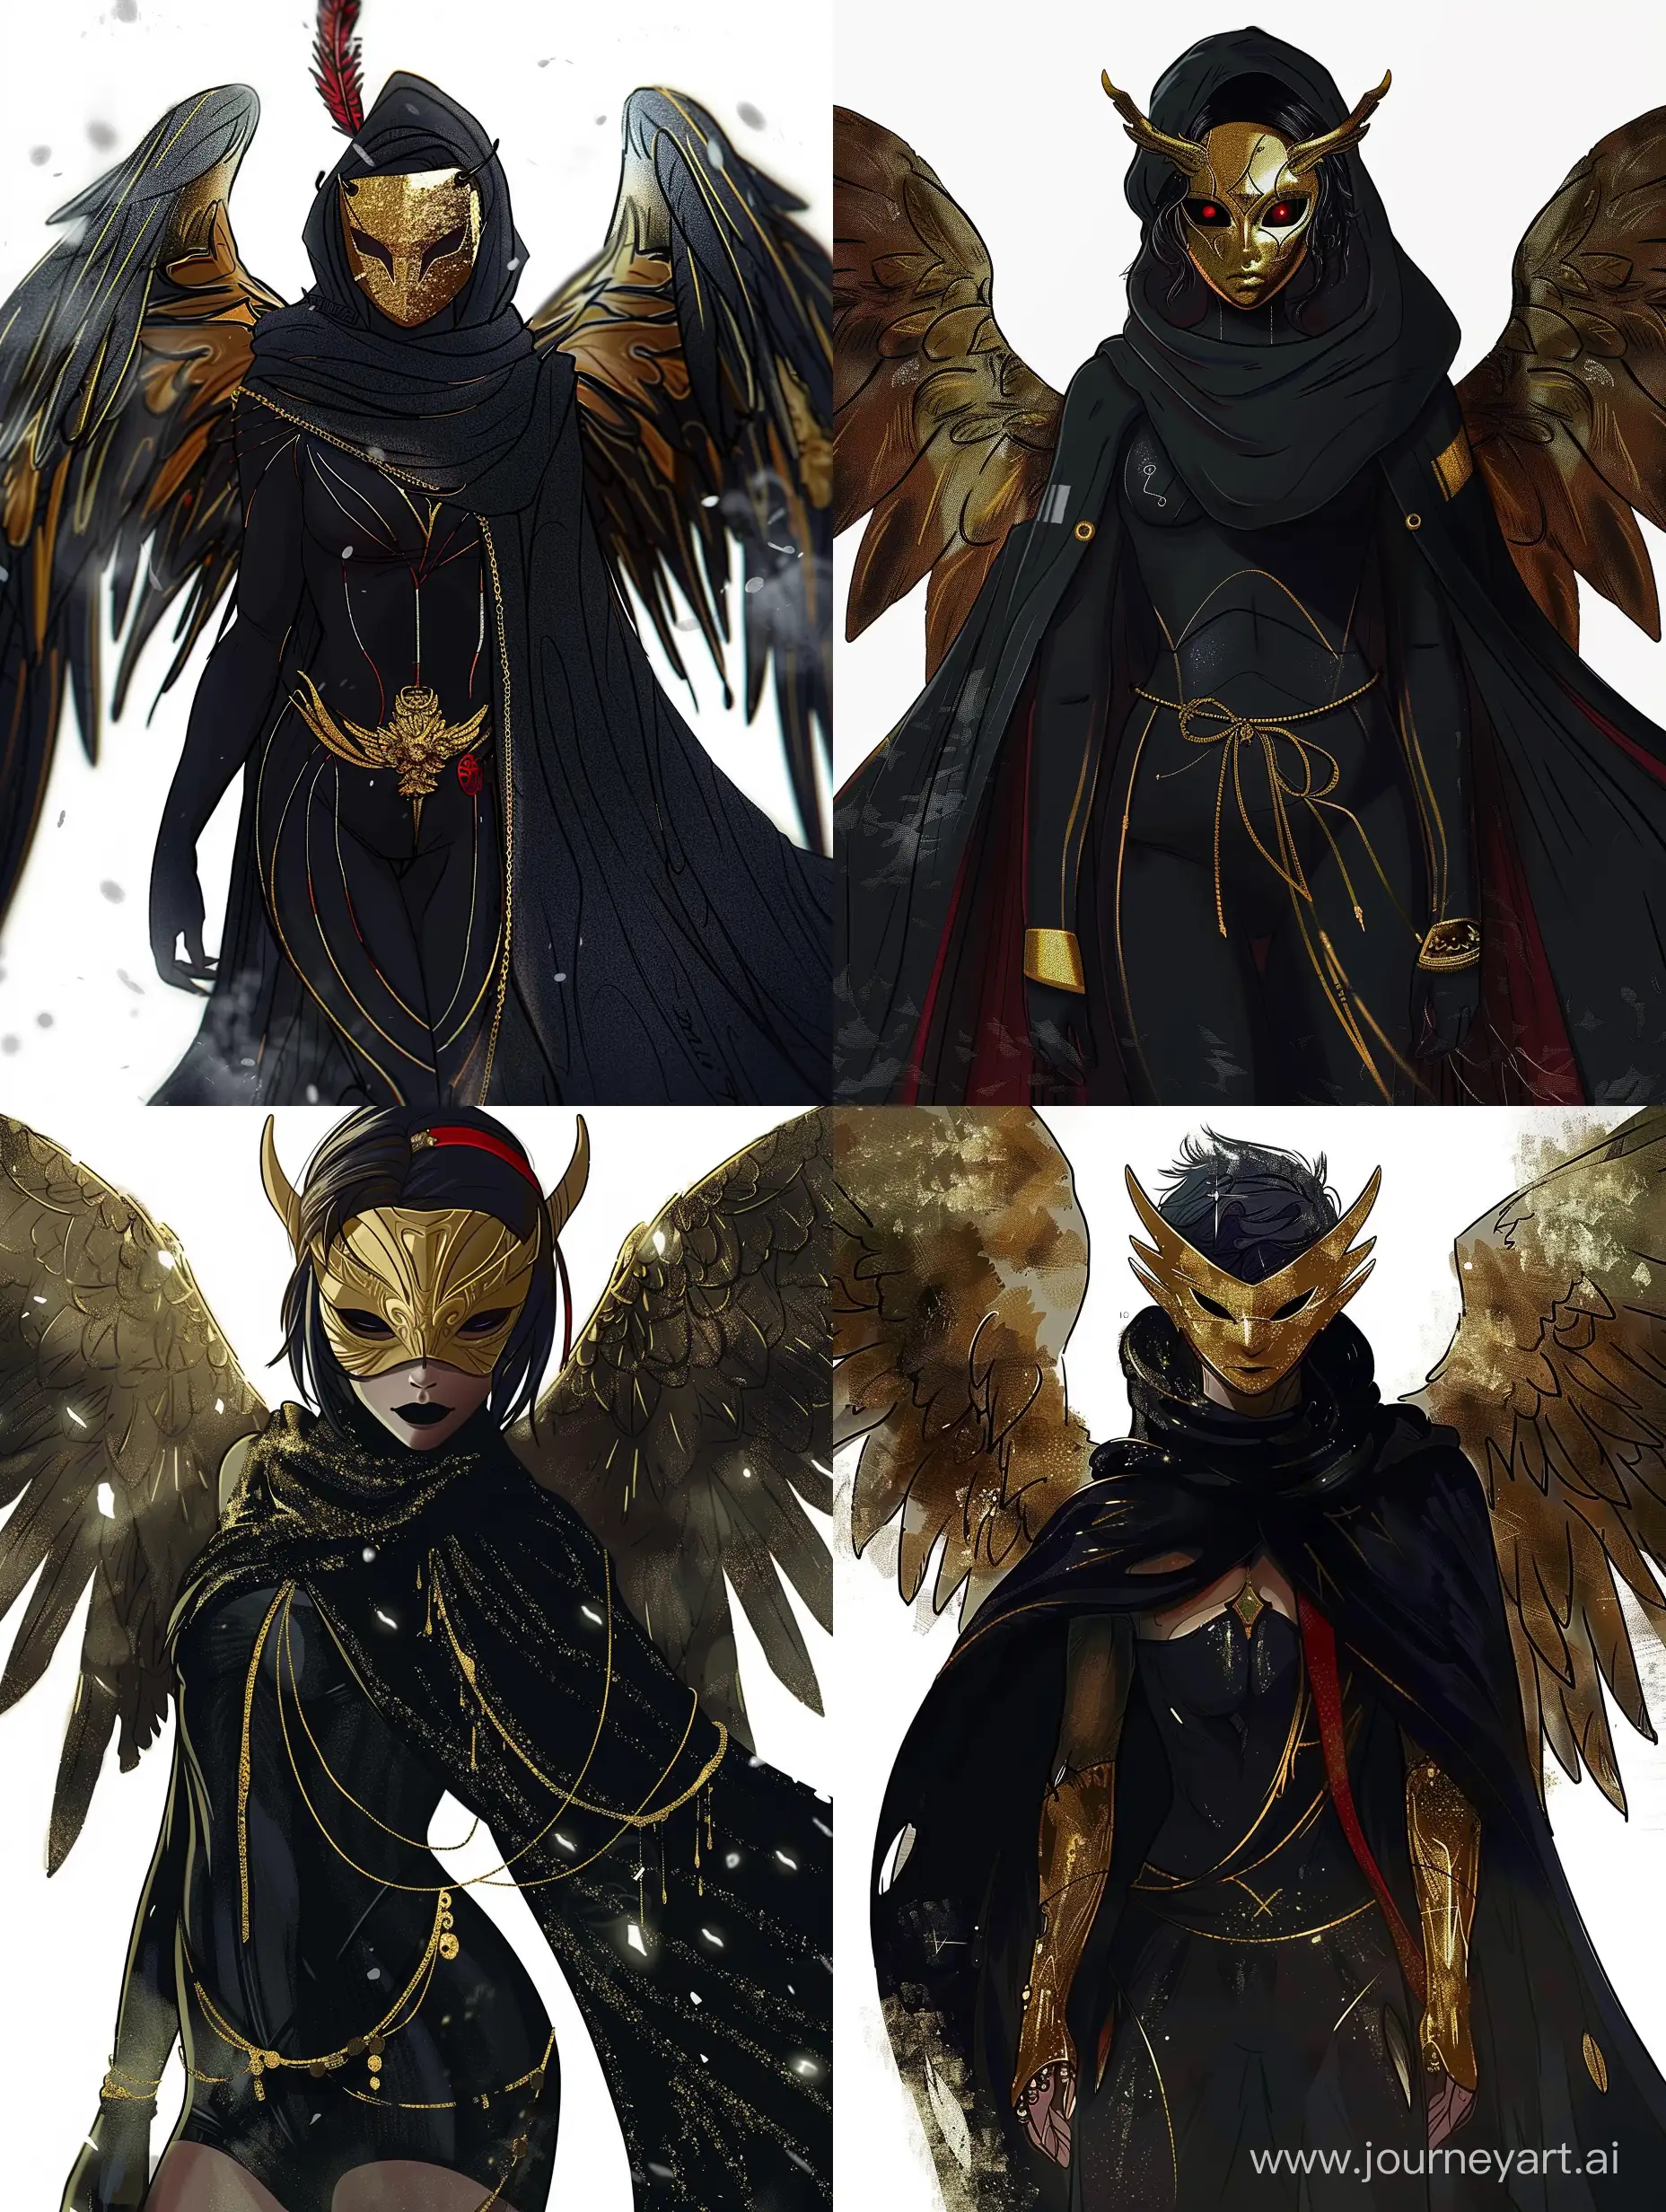 Dark-Angel-with-Golden-Mask-in-Surreal-Digital-Art